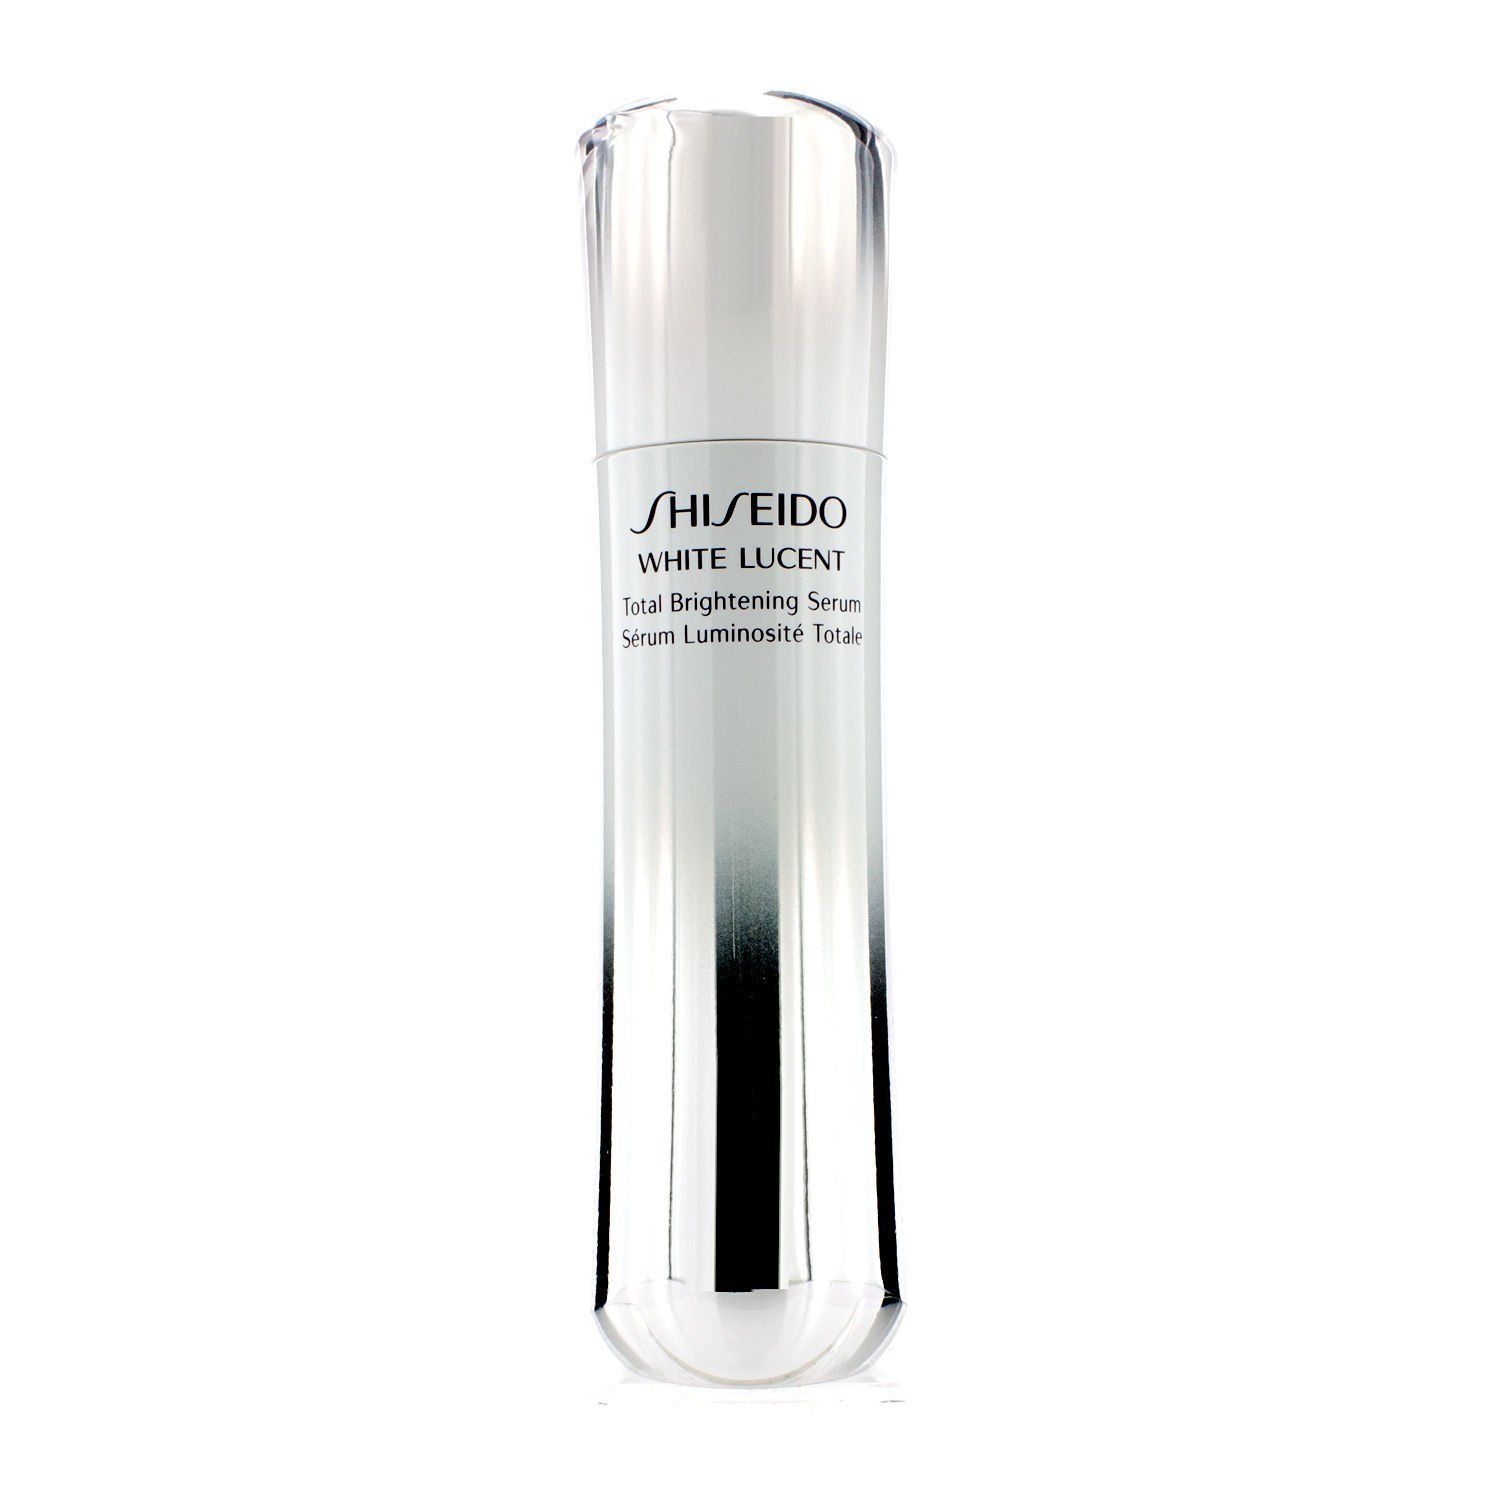 Shiseido White Lucent Total Brightening Serum - 50ml /1.7oz NEW IN BOX